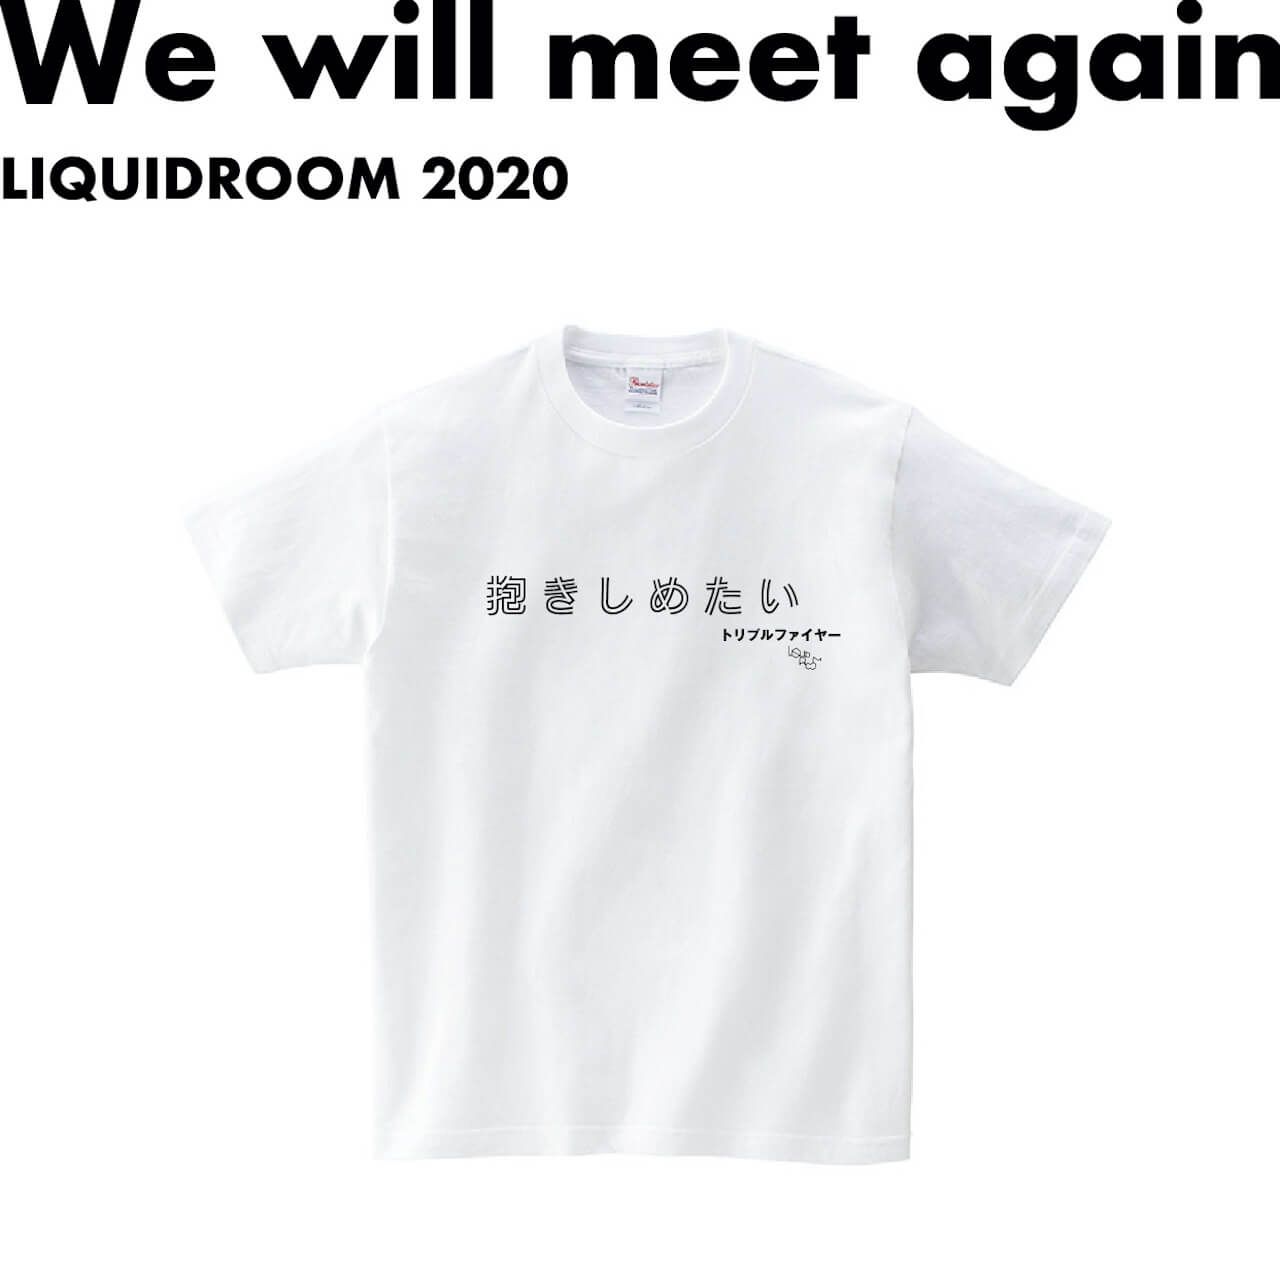 LIQUIDROOMのコラボTプロジェクト〈We will meet again〉にミツメ、トリプルファイヤーが参加 music200625-liquidroom-mitsume-triplefire-2